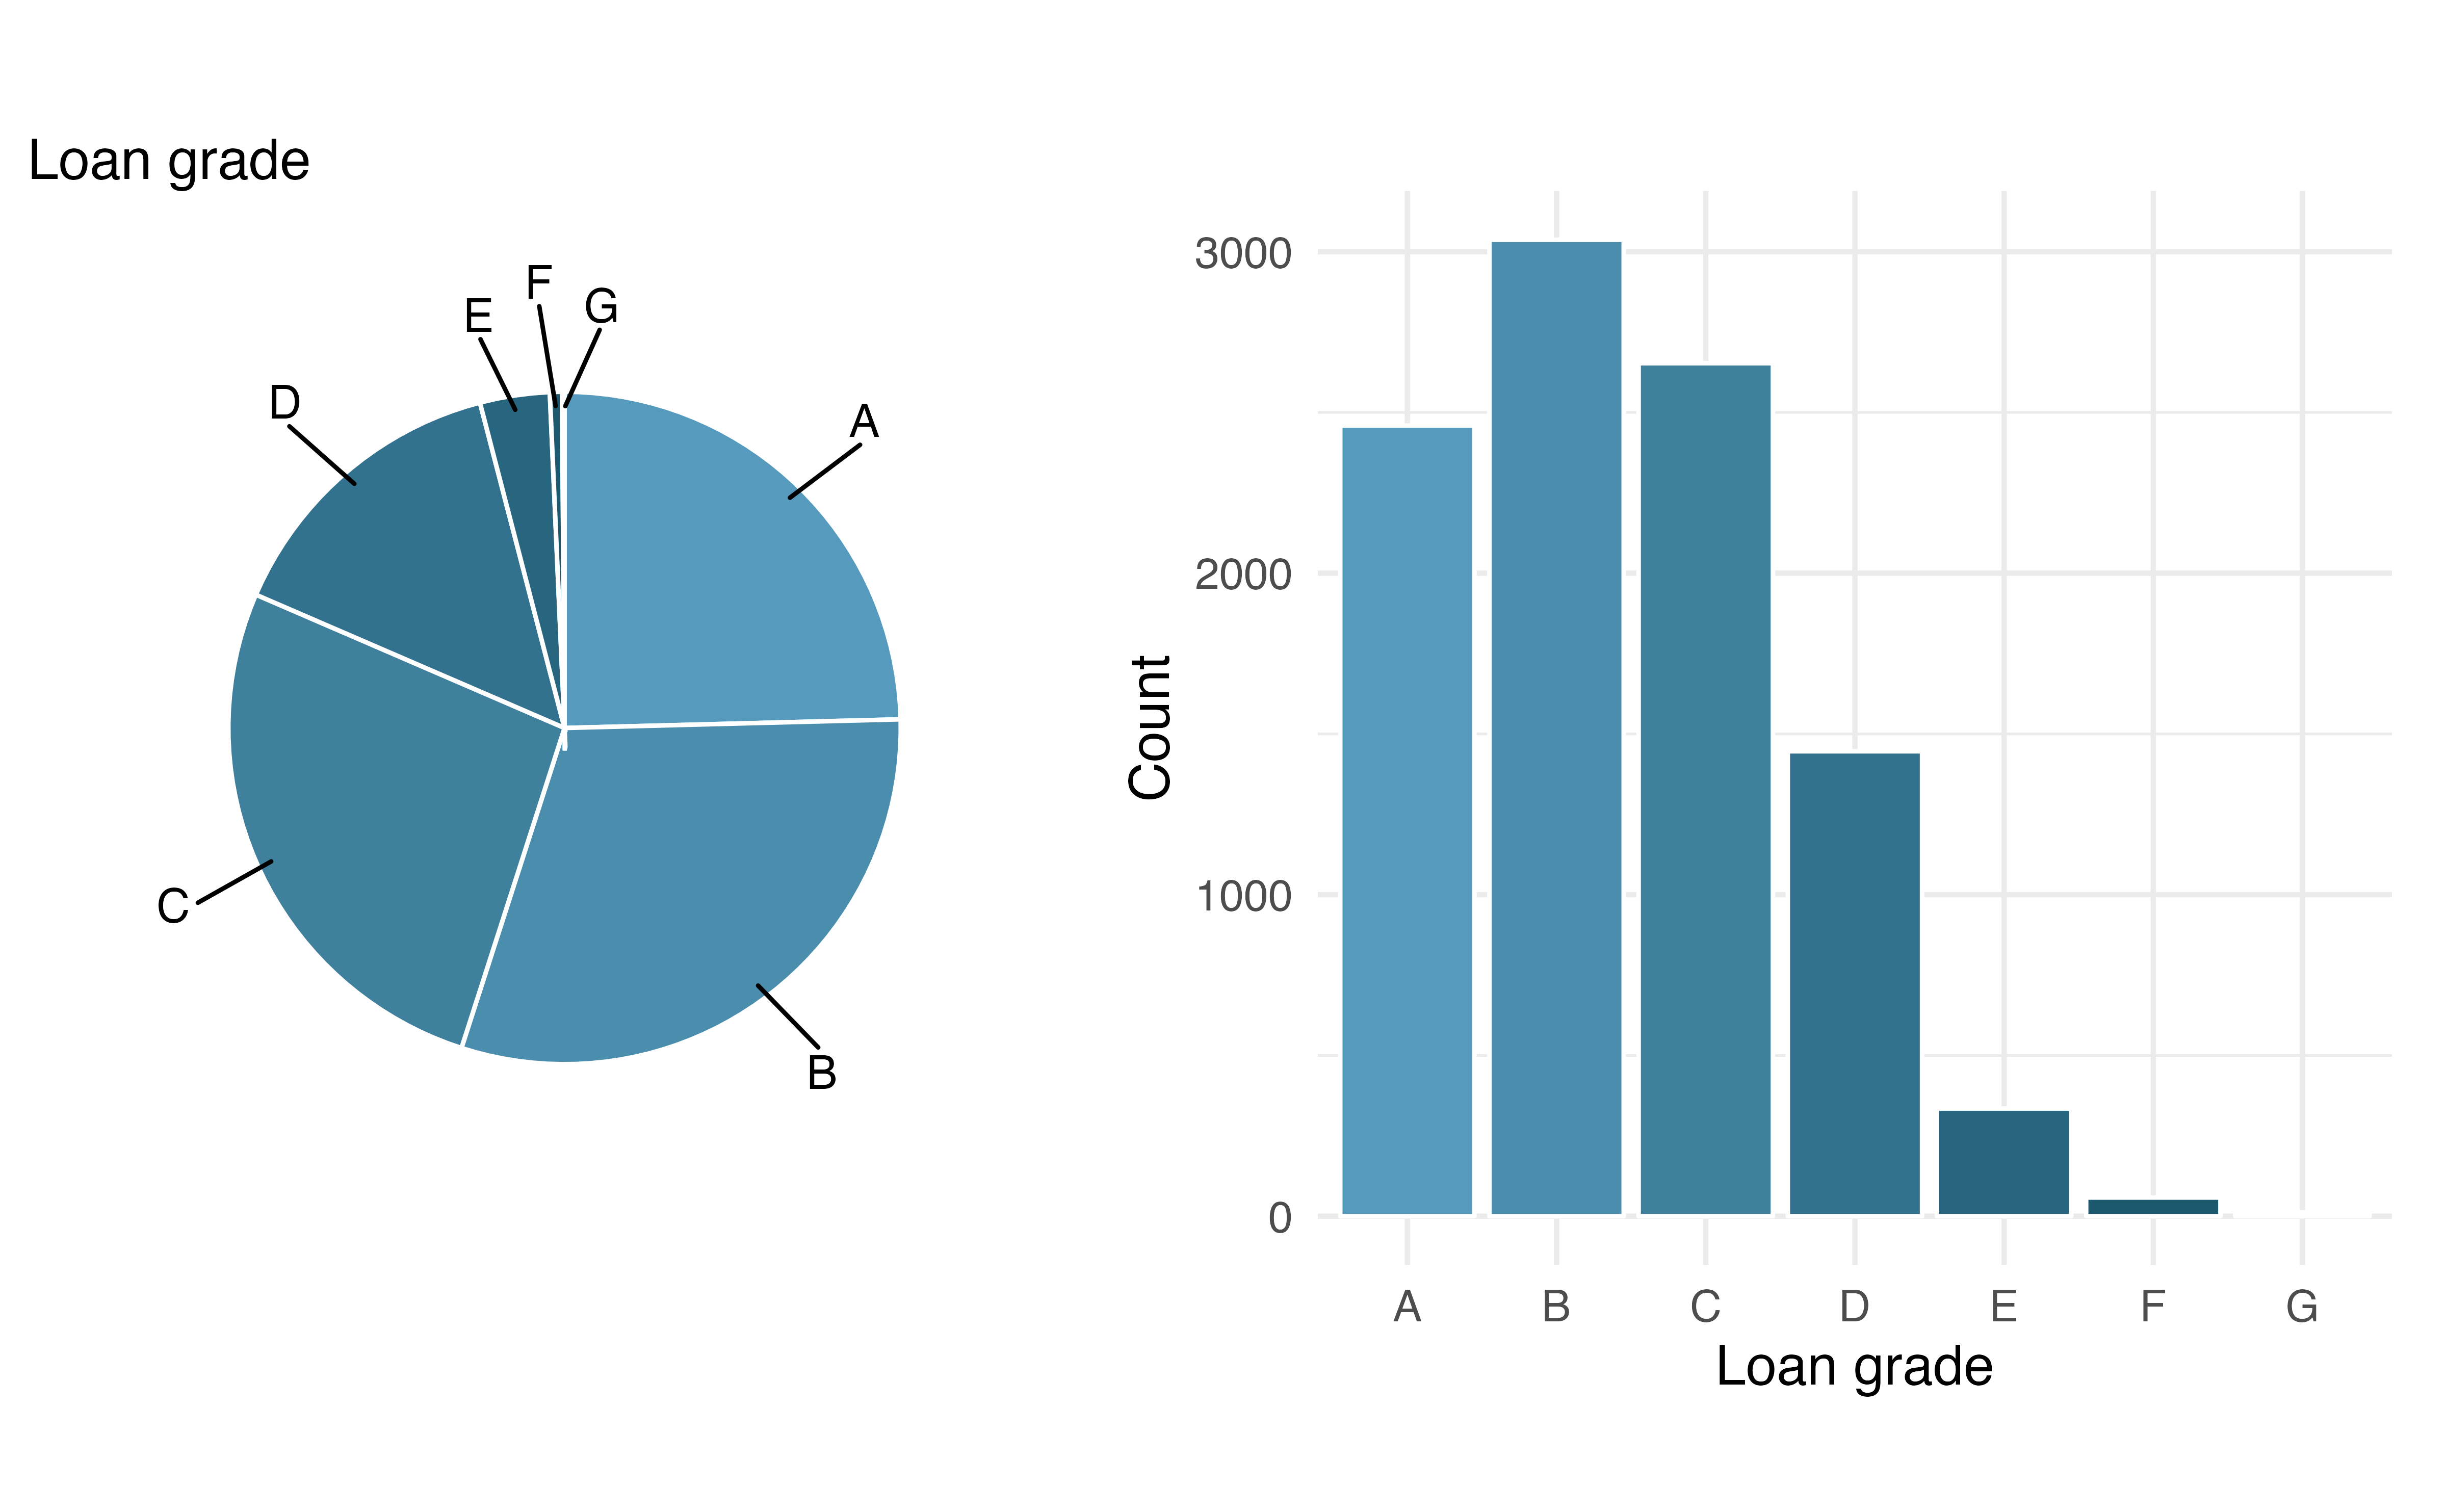 A pie chart and bar plot of loan grades.